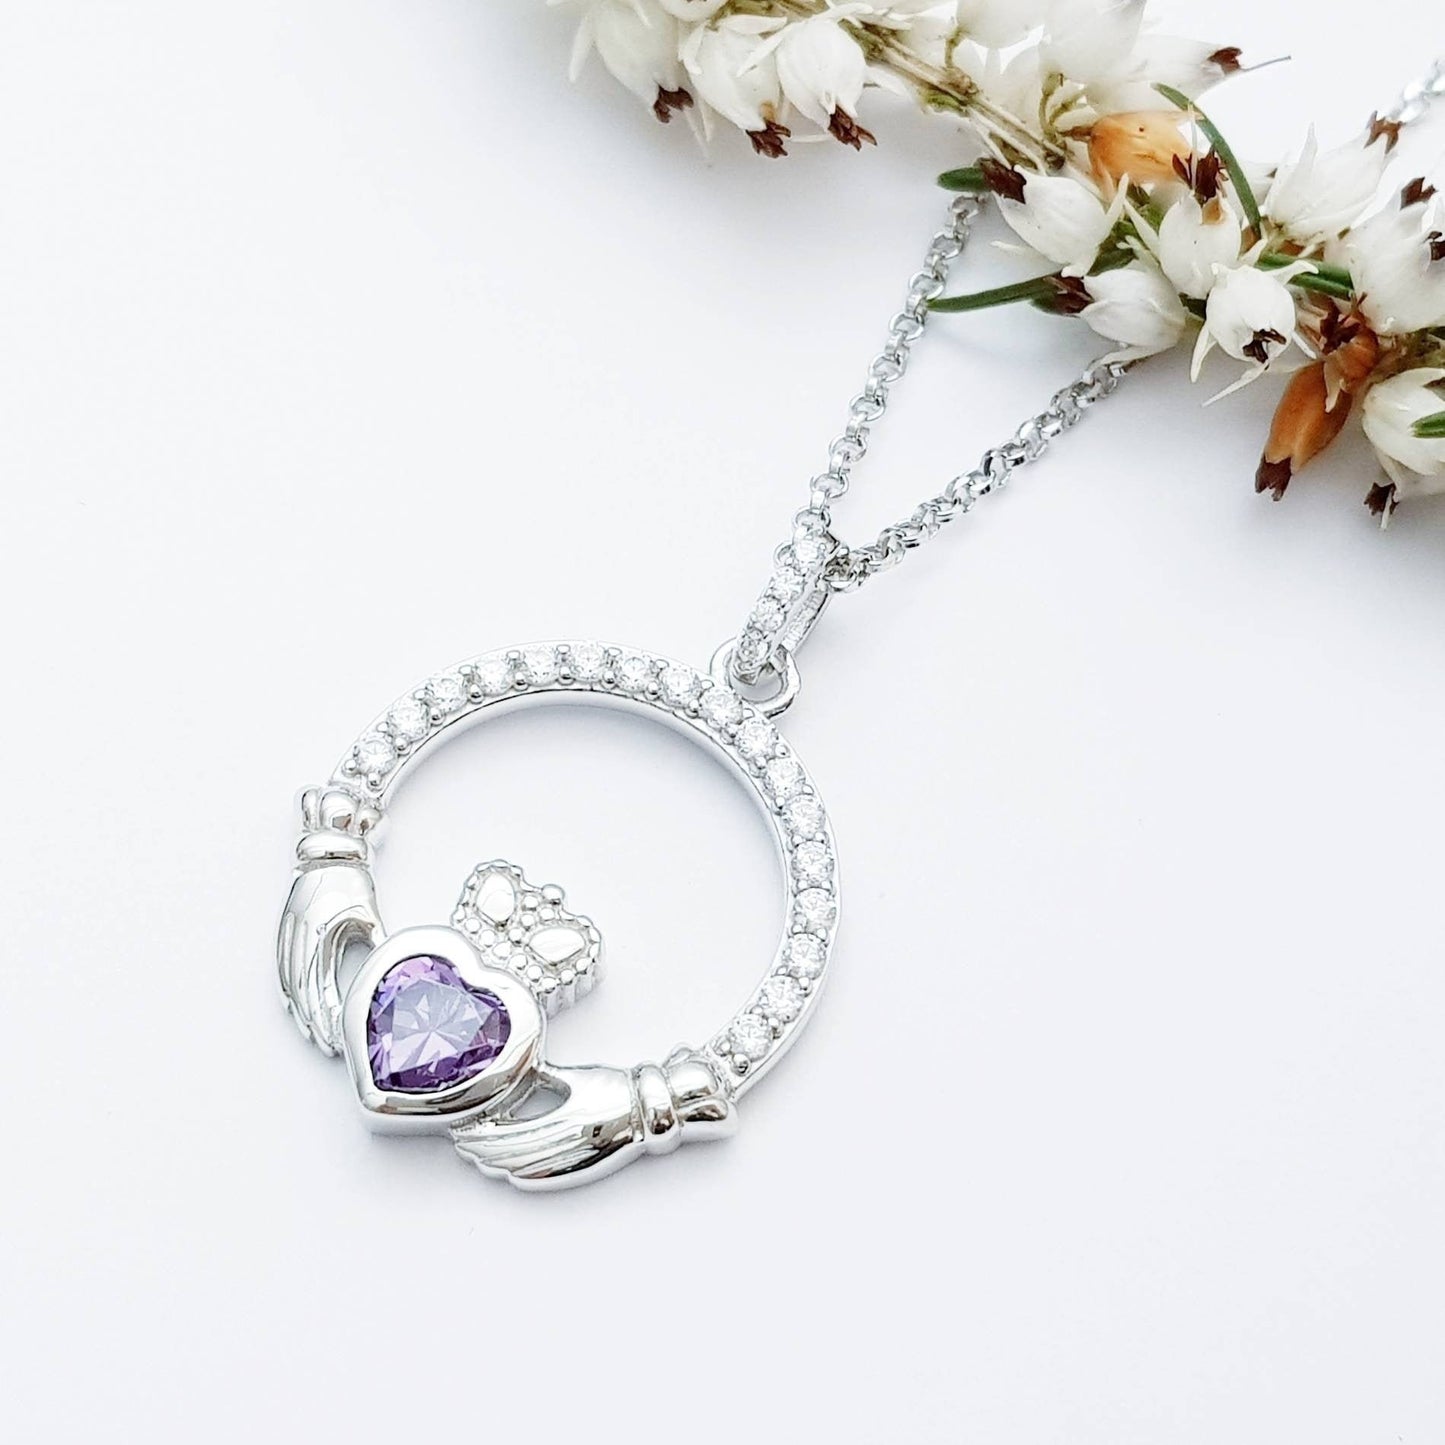 Claddagh necklace with purple February birthstone, Irish claddagh from Galway